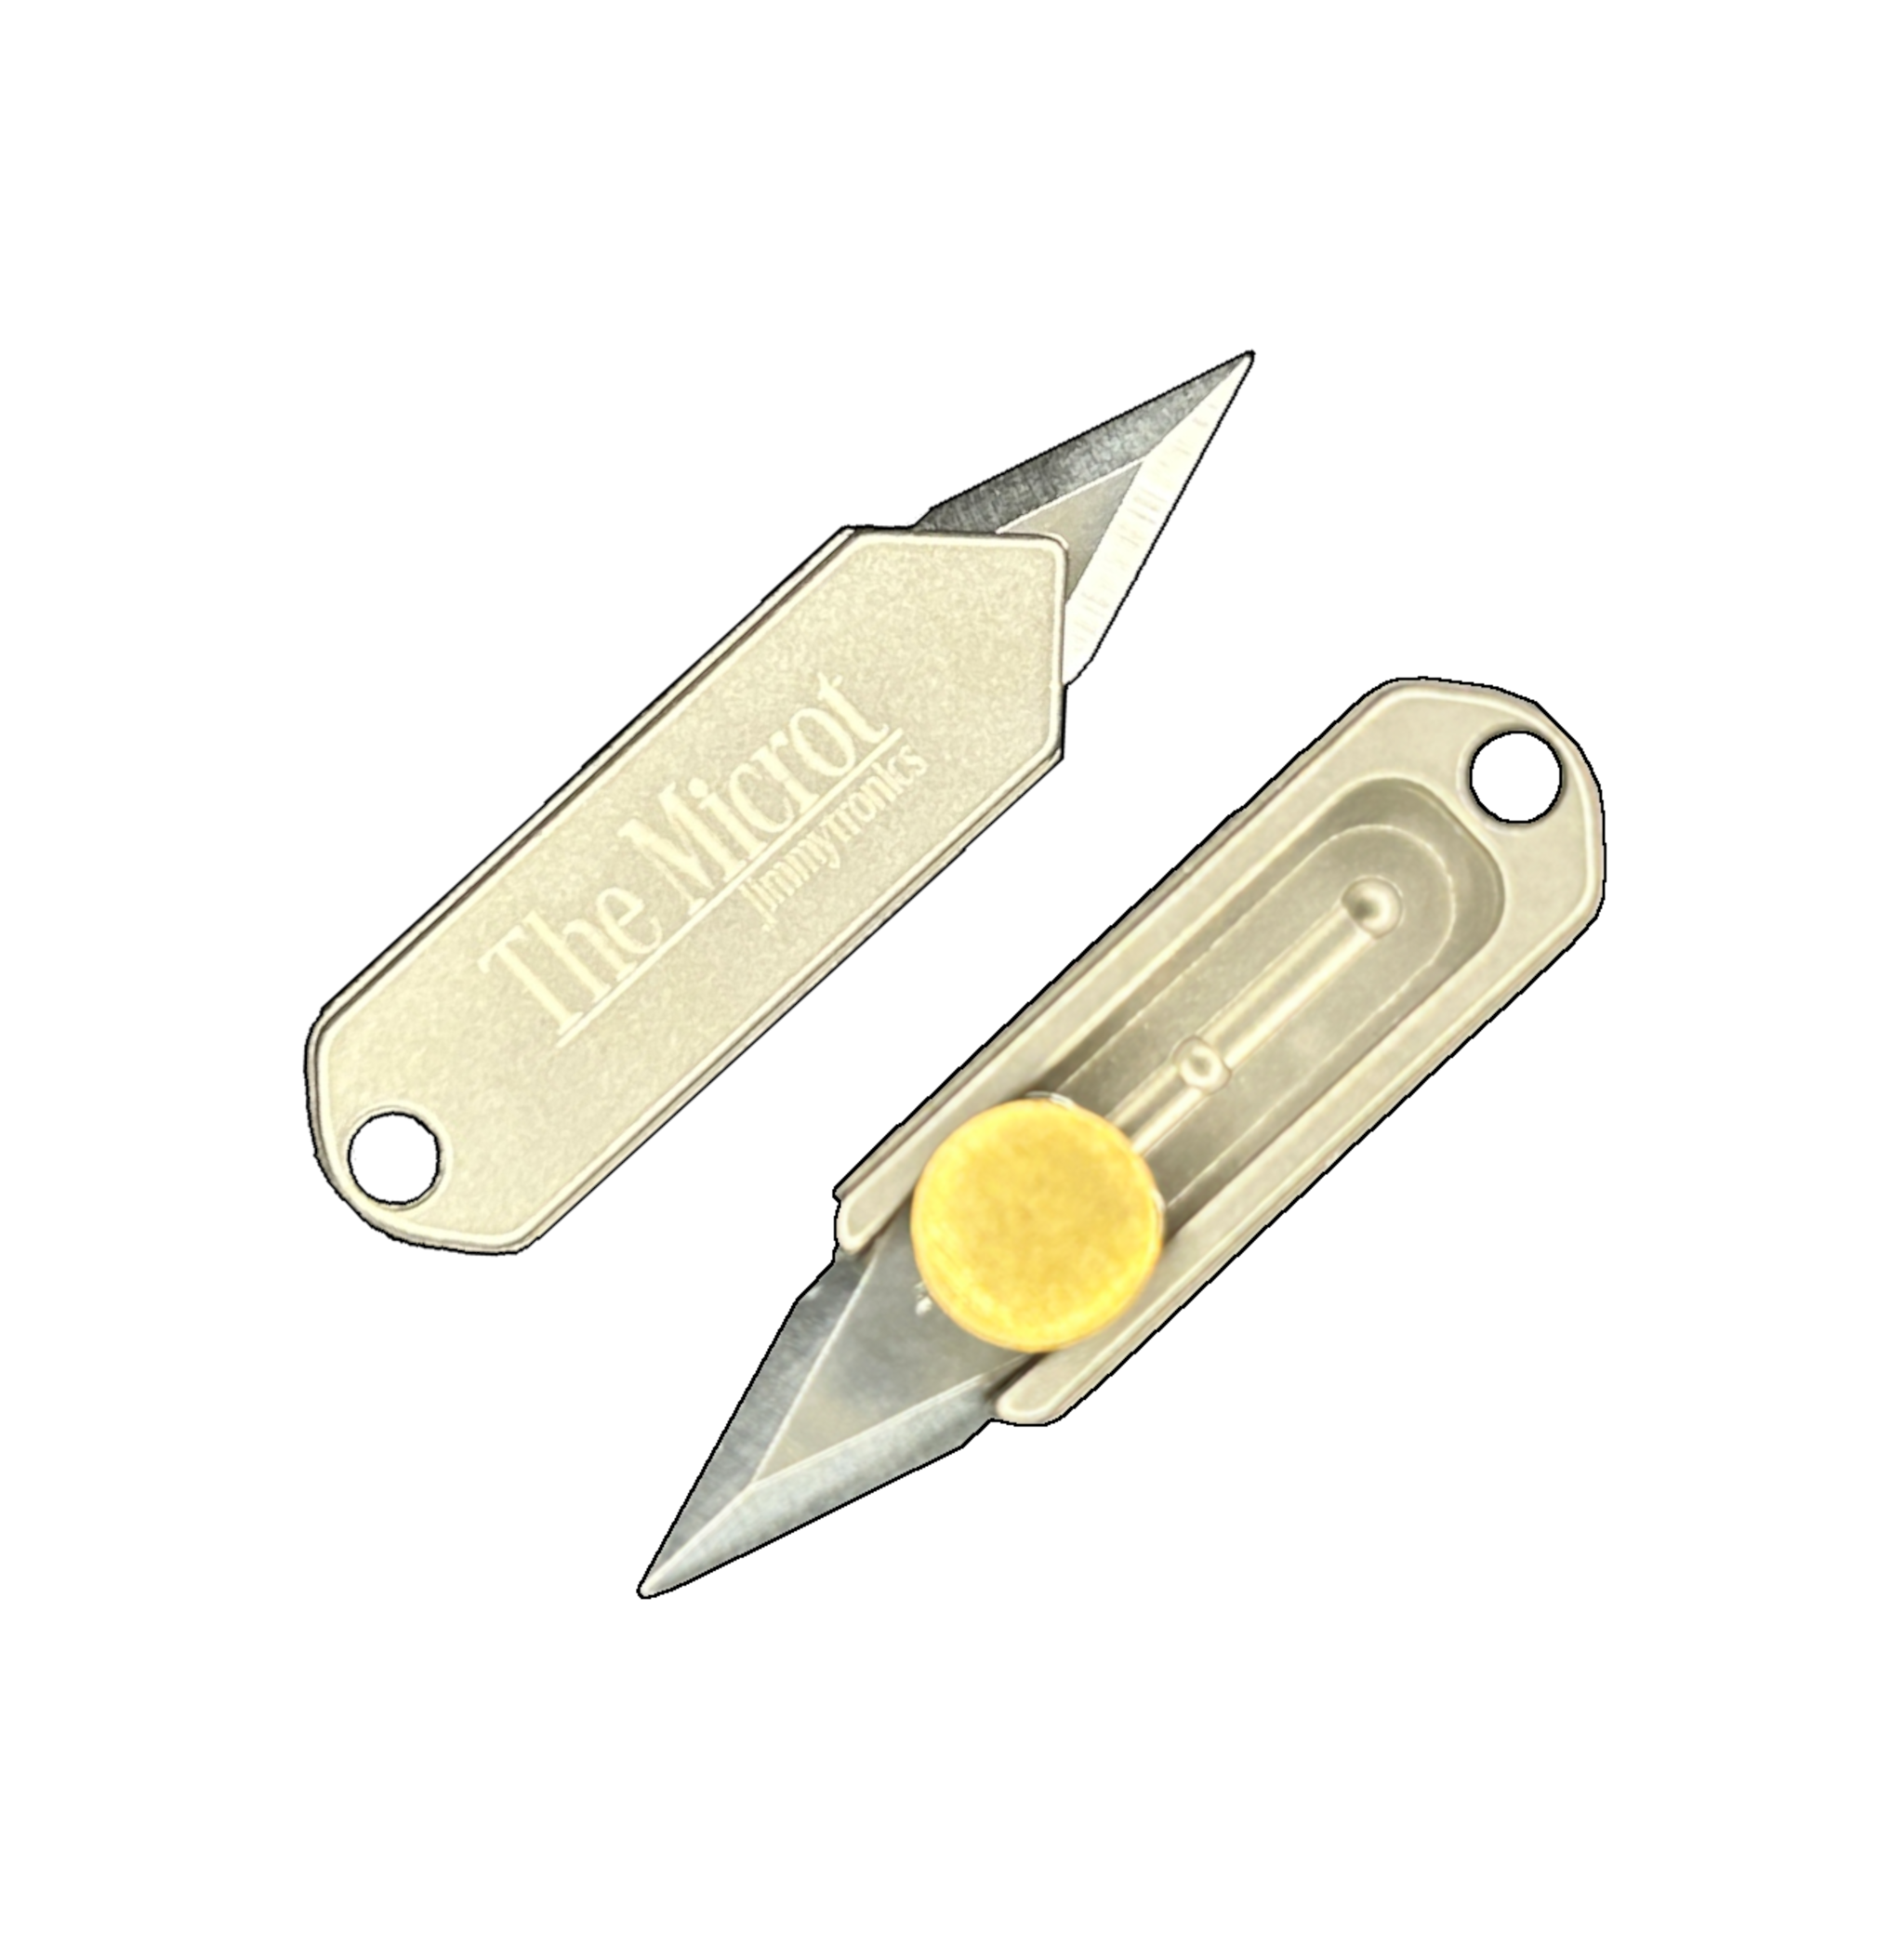 The Microt: Titanium Keychain Knife